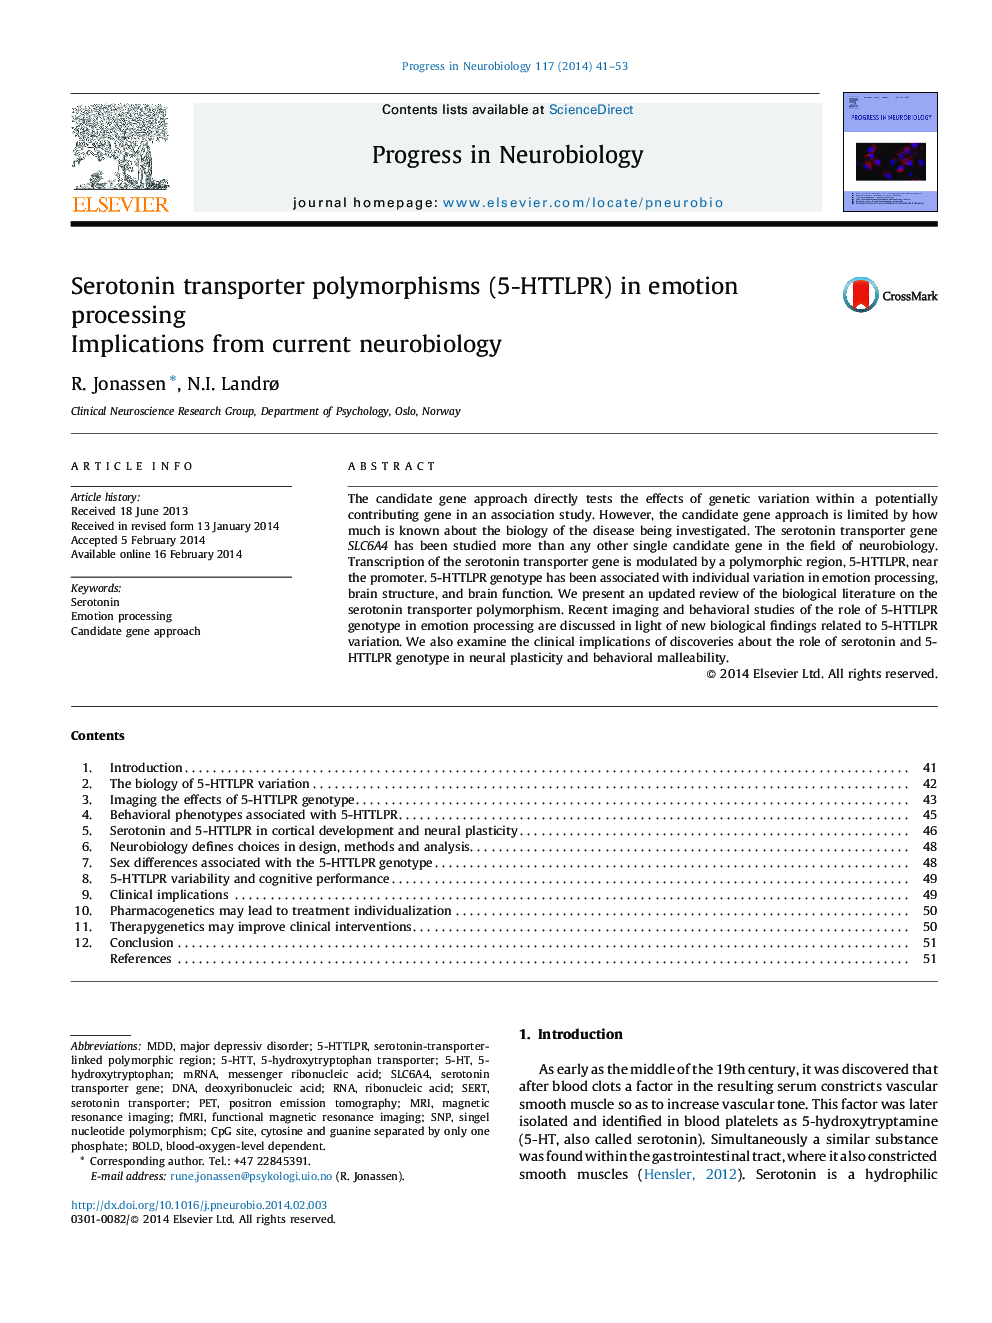 Serotonin transporter polymorphisms (5-HTTLPR) in emotion processing: Implications from current neurobiology